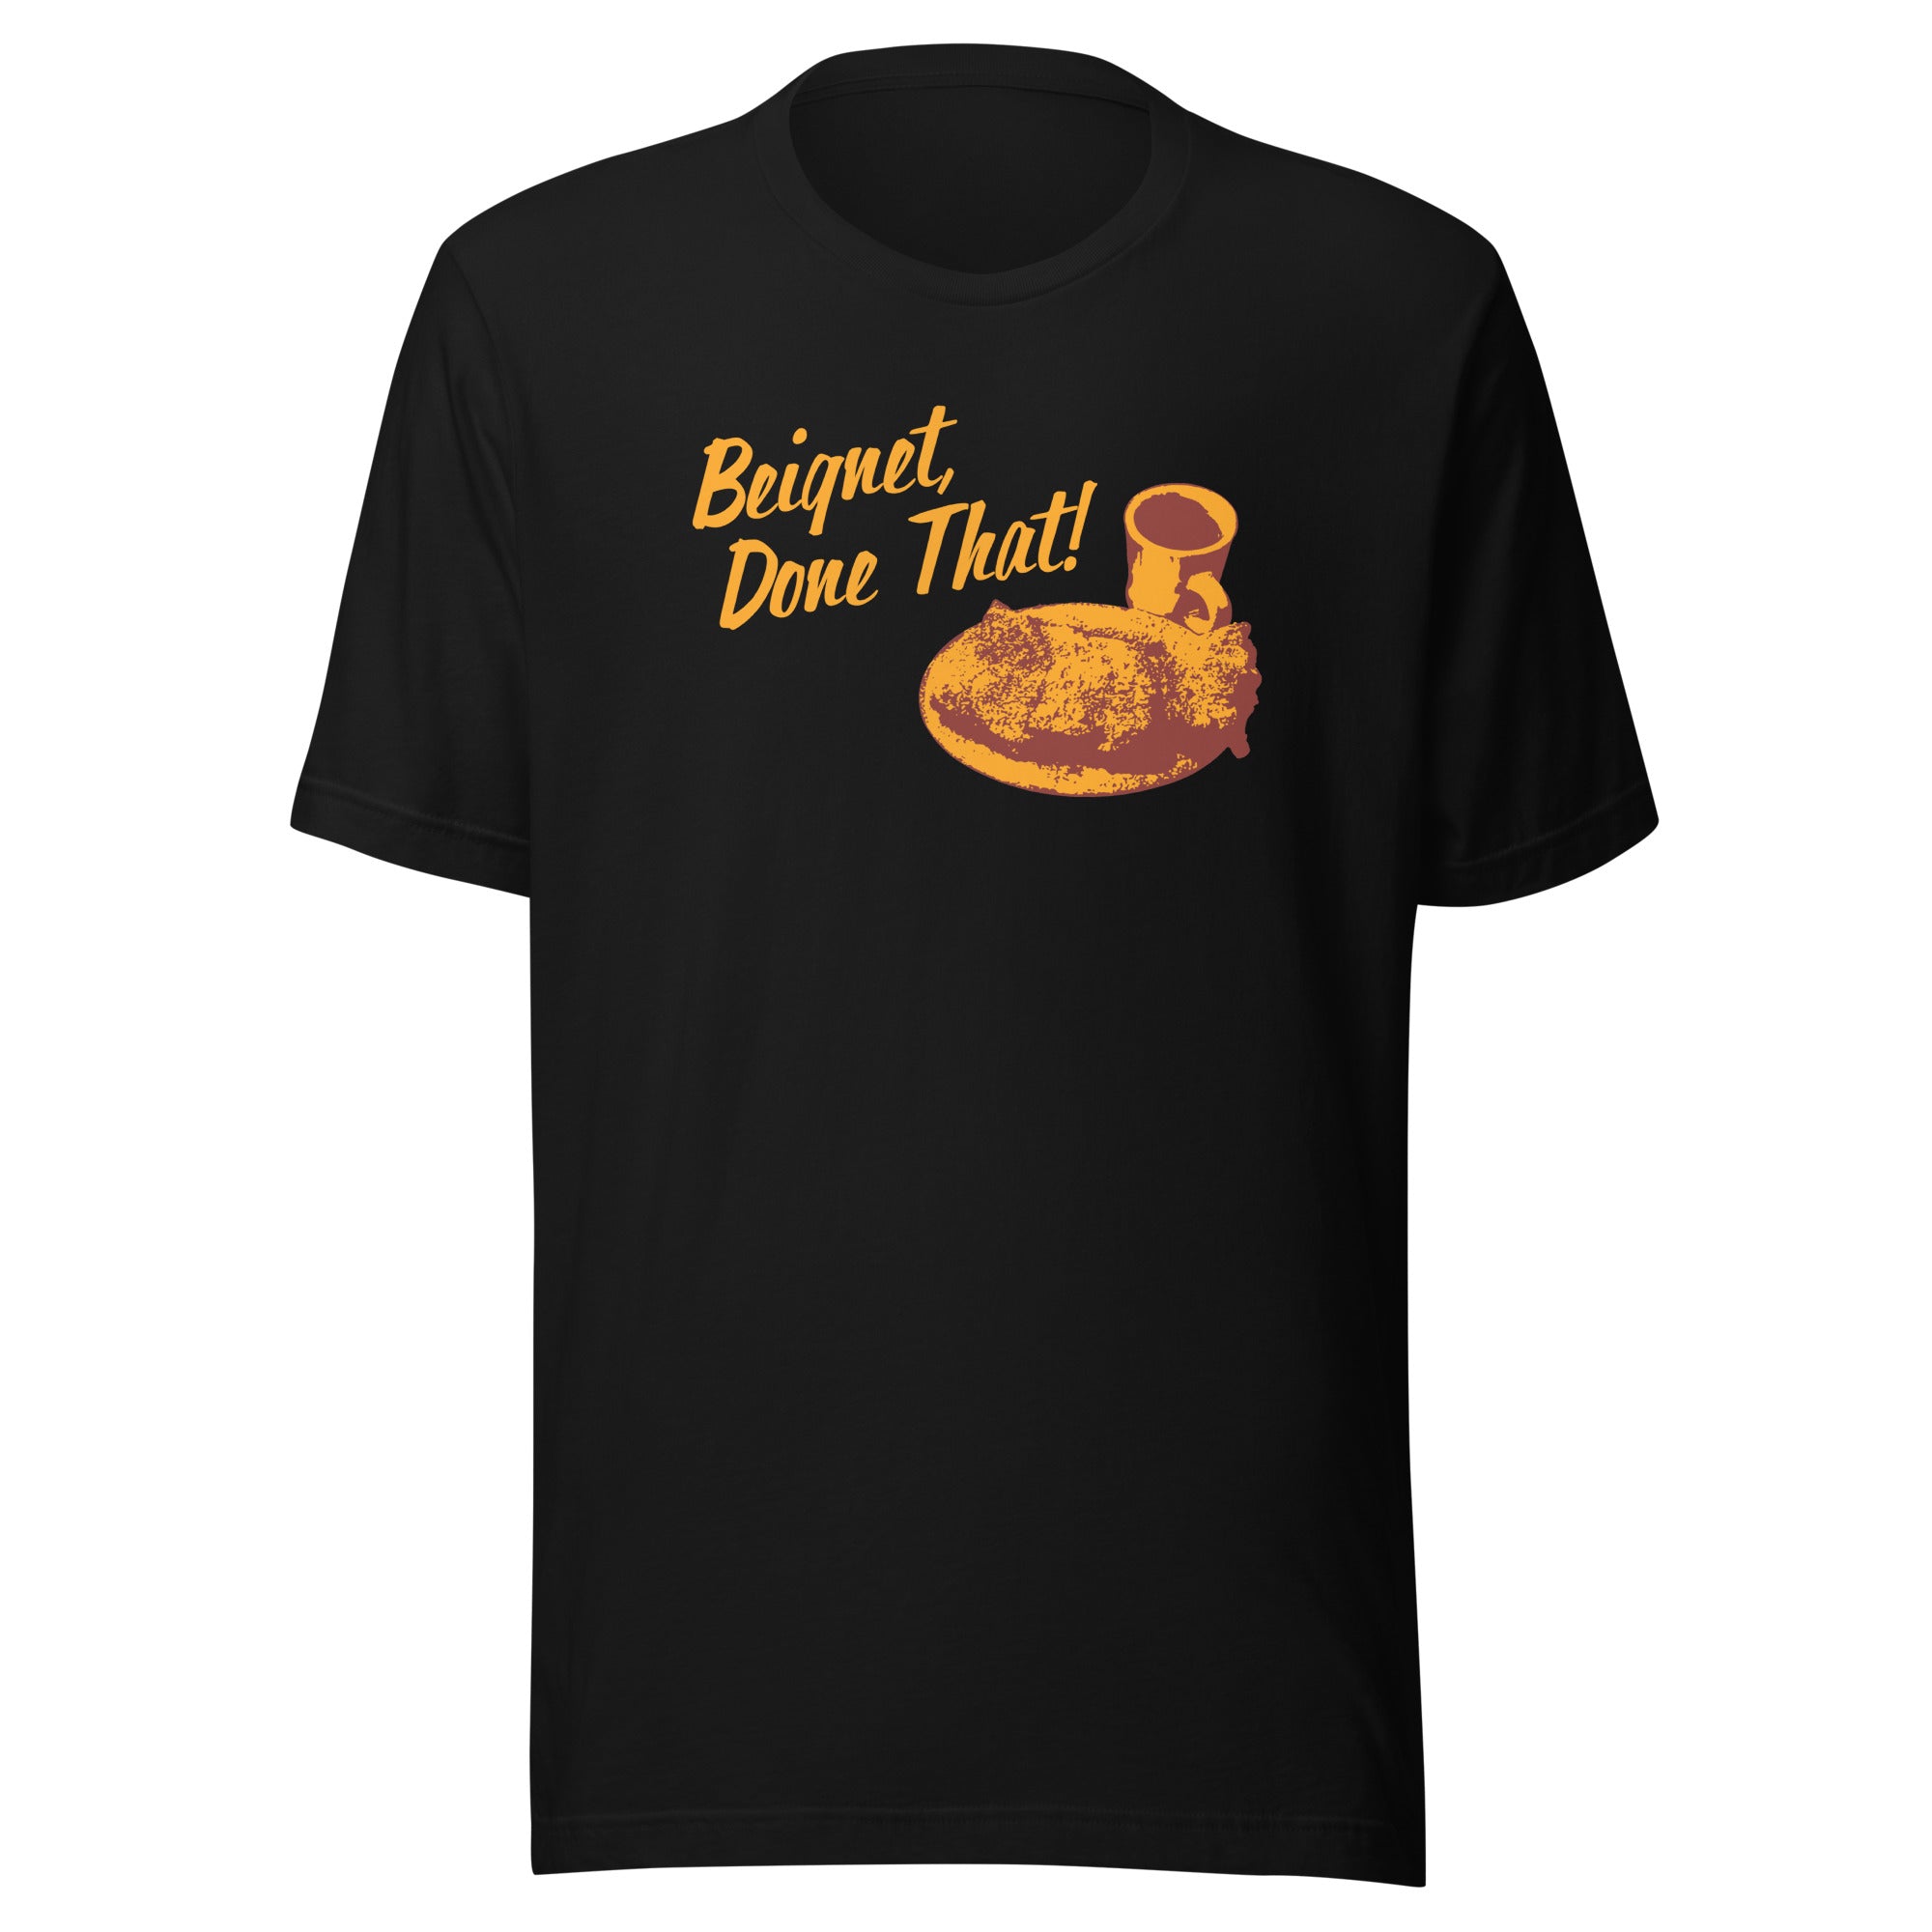 Conan O'Brien Needs A Friend: Beignet, Done That- T-shirt (Black)